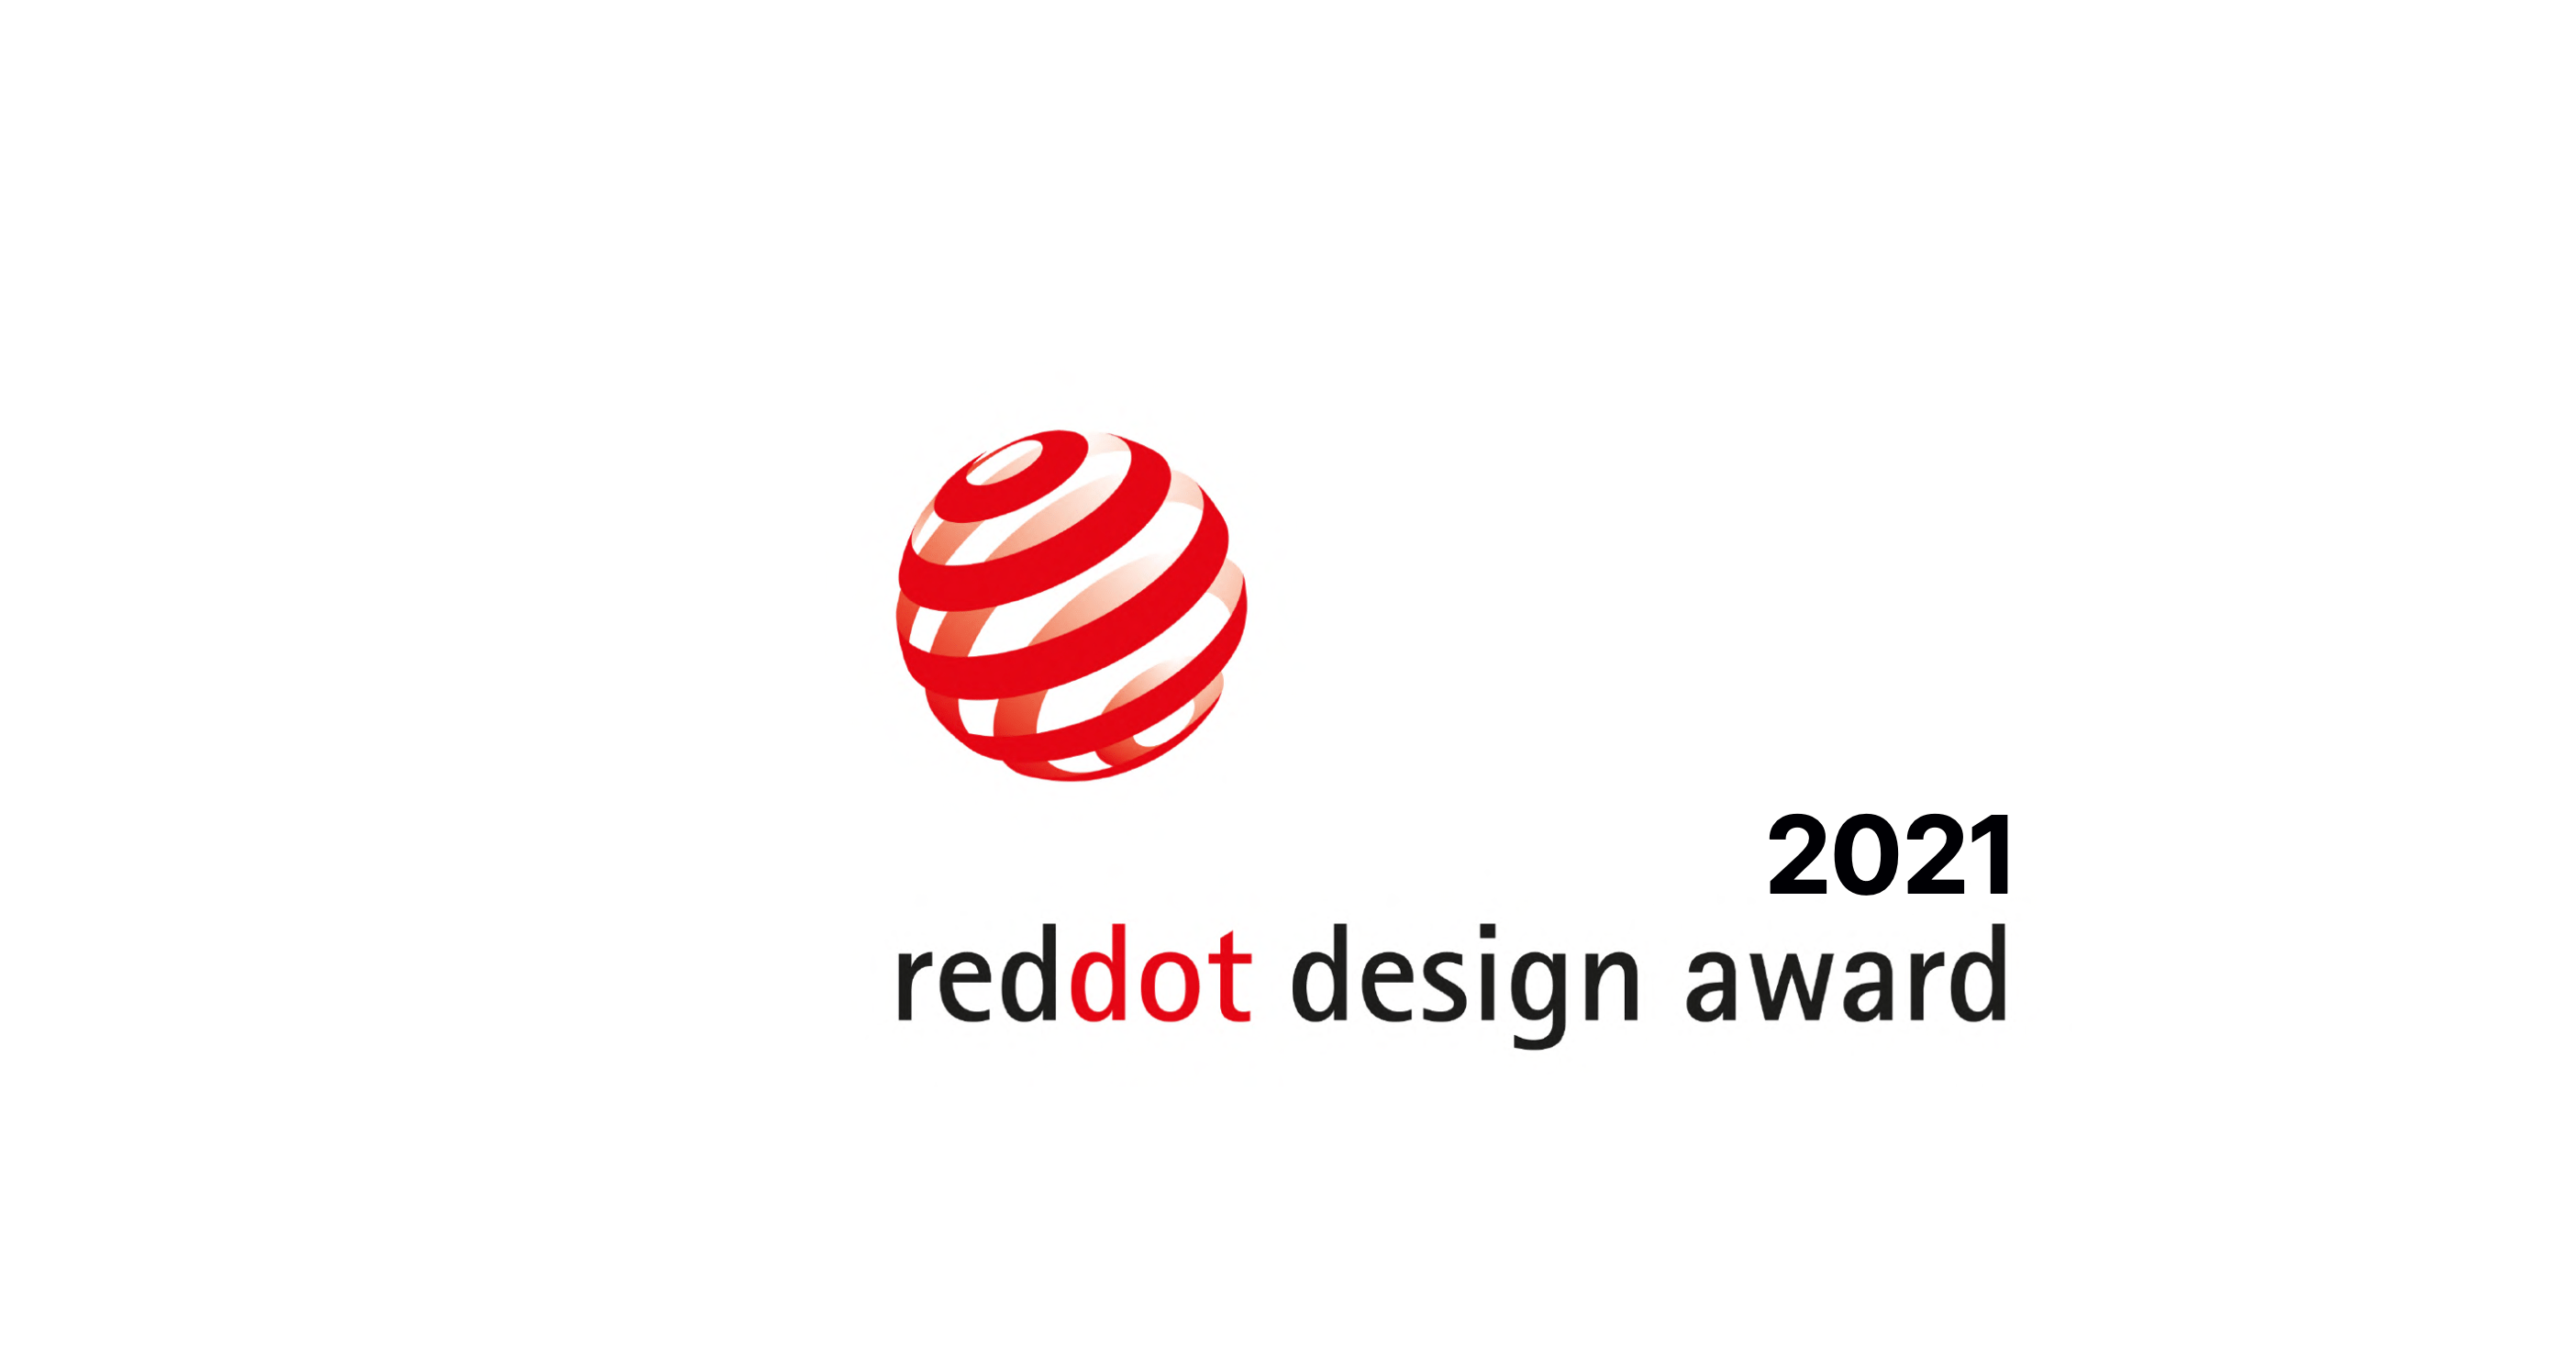 Zazu is the Red Dot Design Award Winner 2021! - Zazu